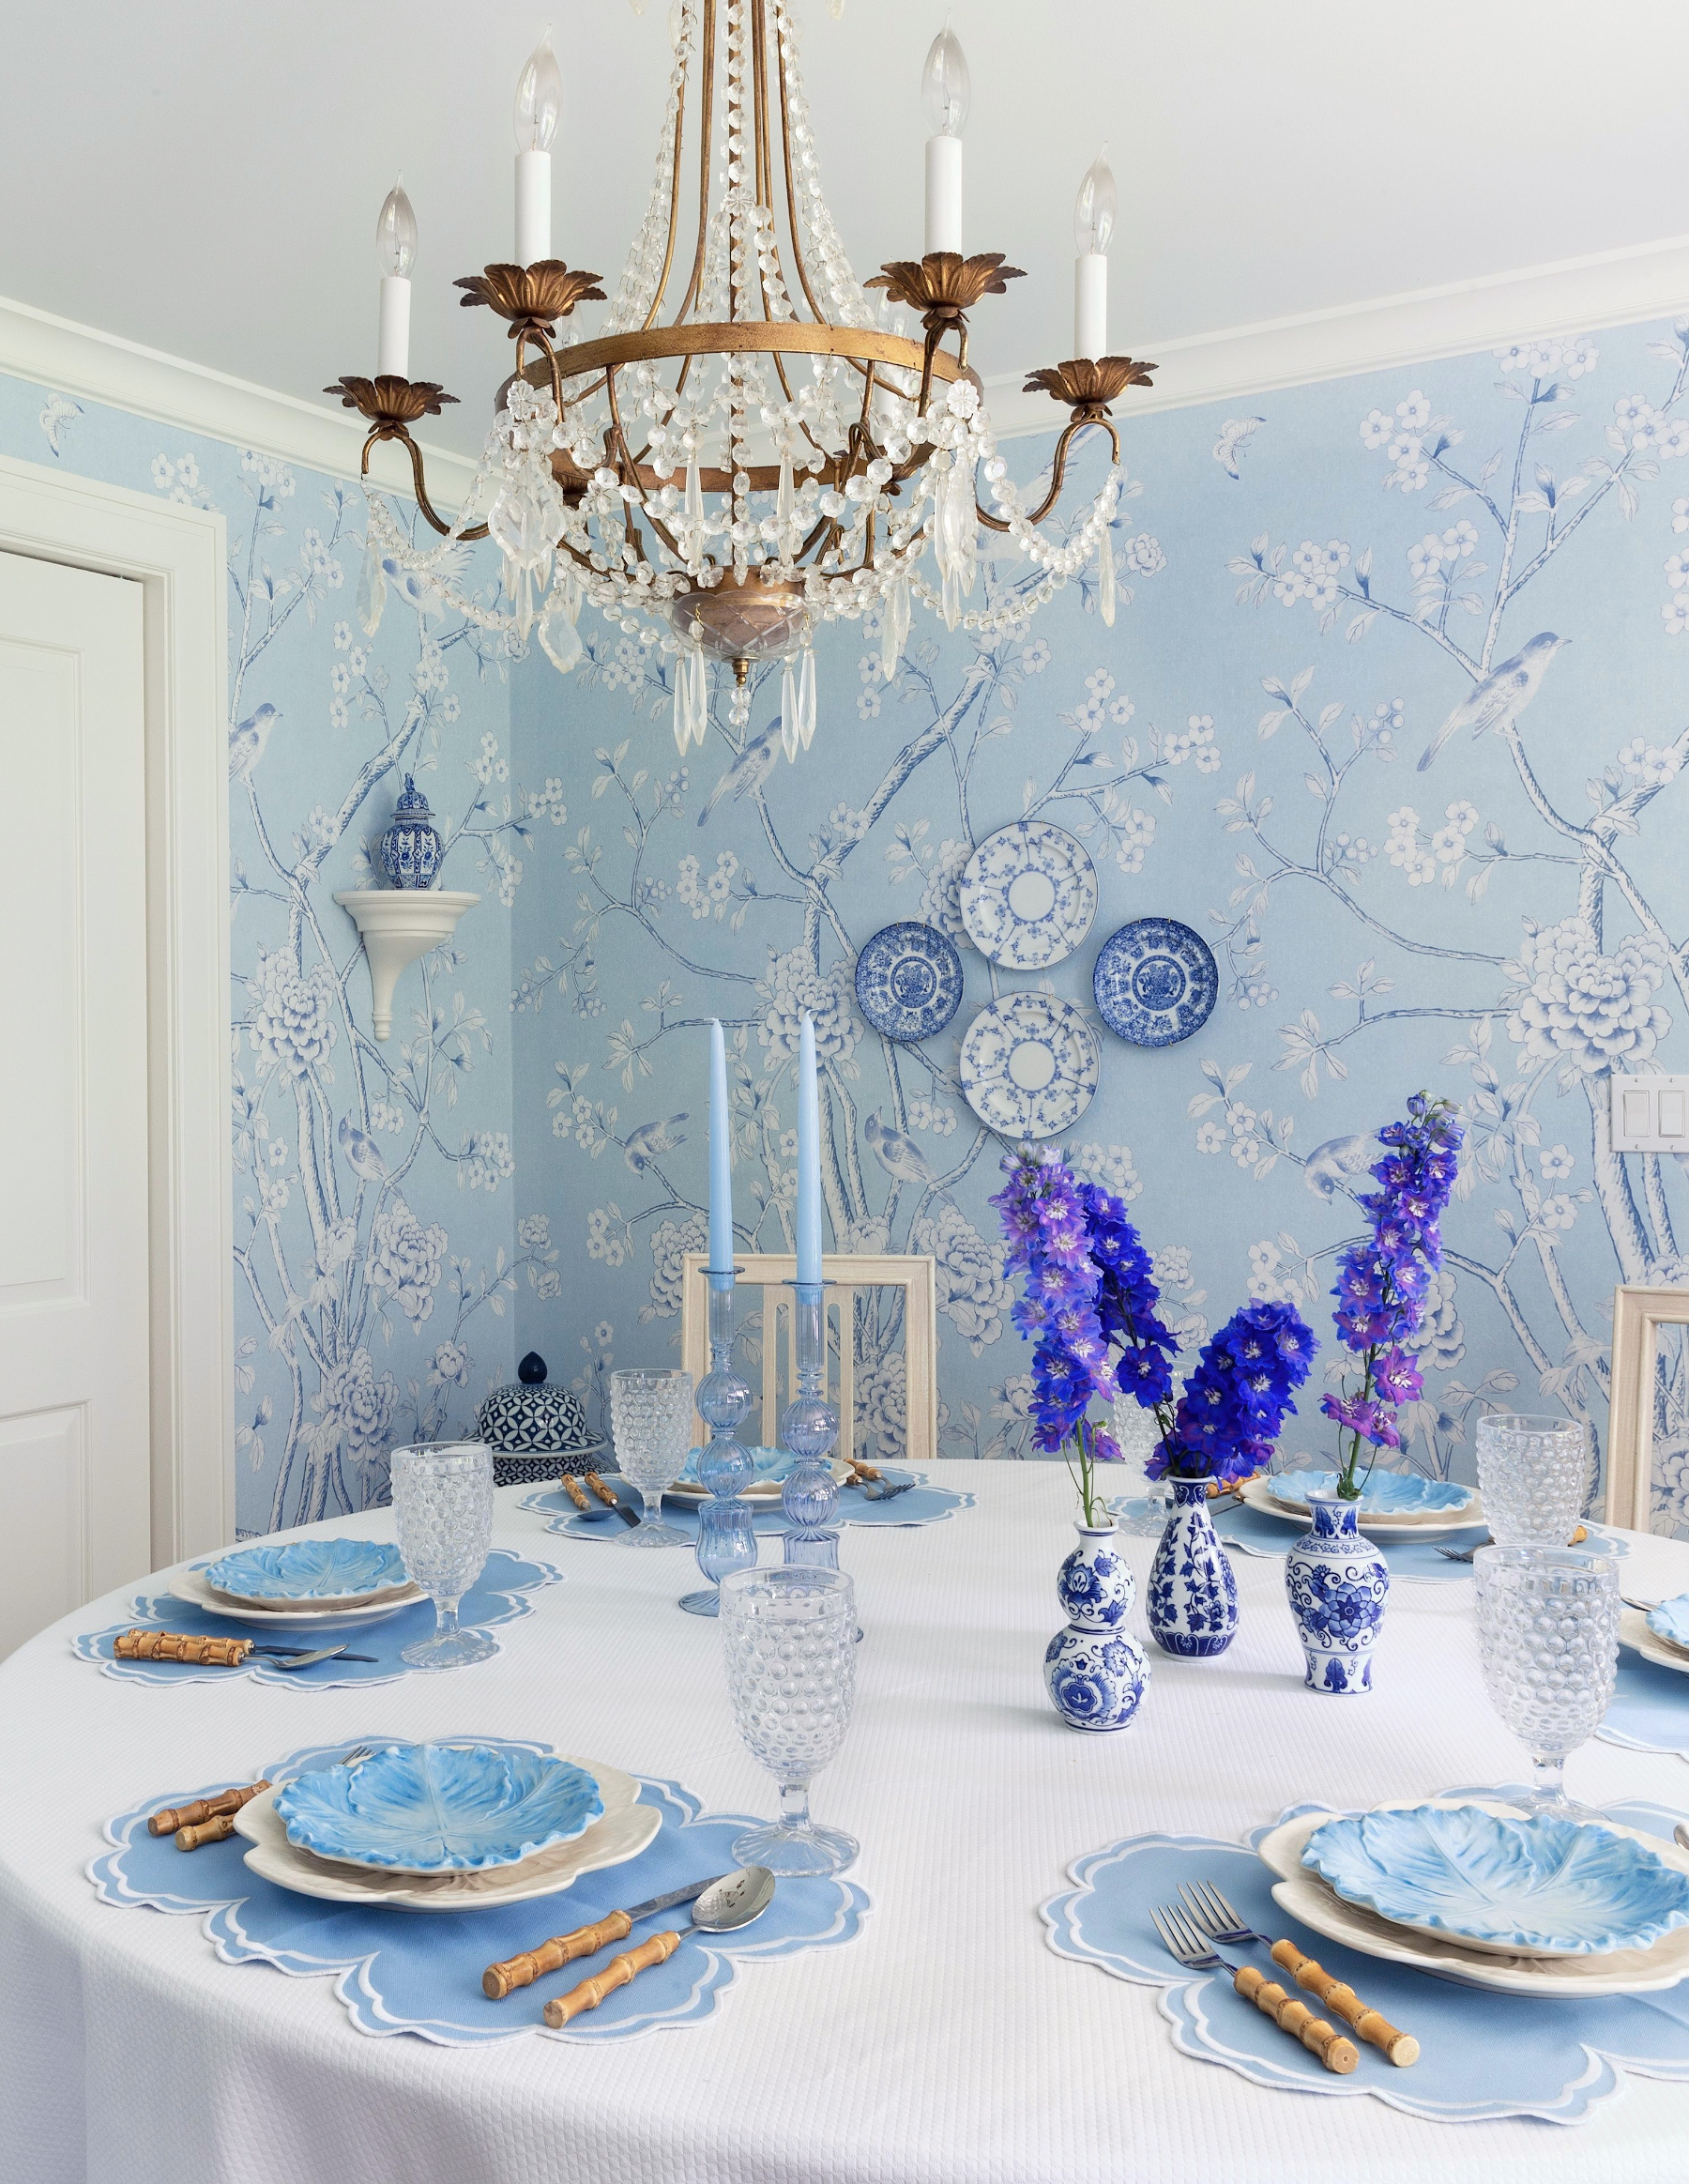 Our Schumacher Blue & White Dining Room - Samantha Varvel